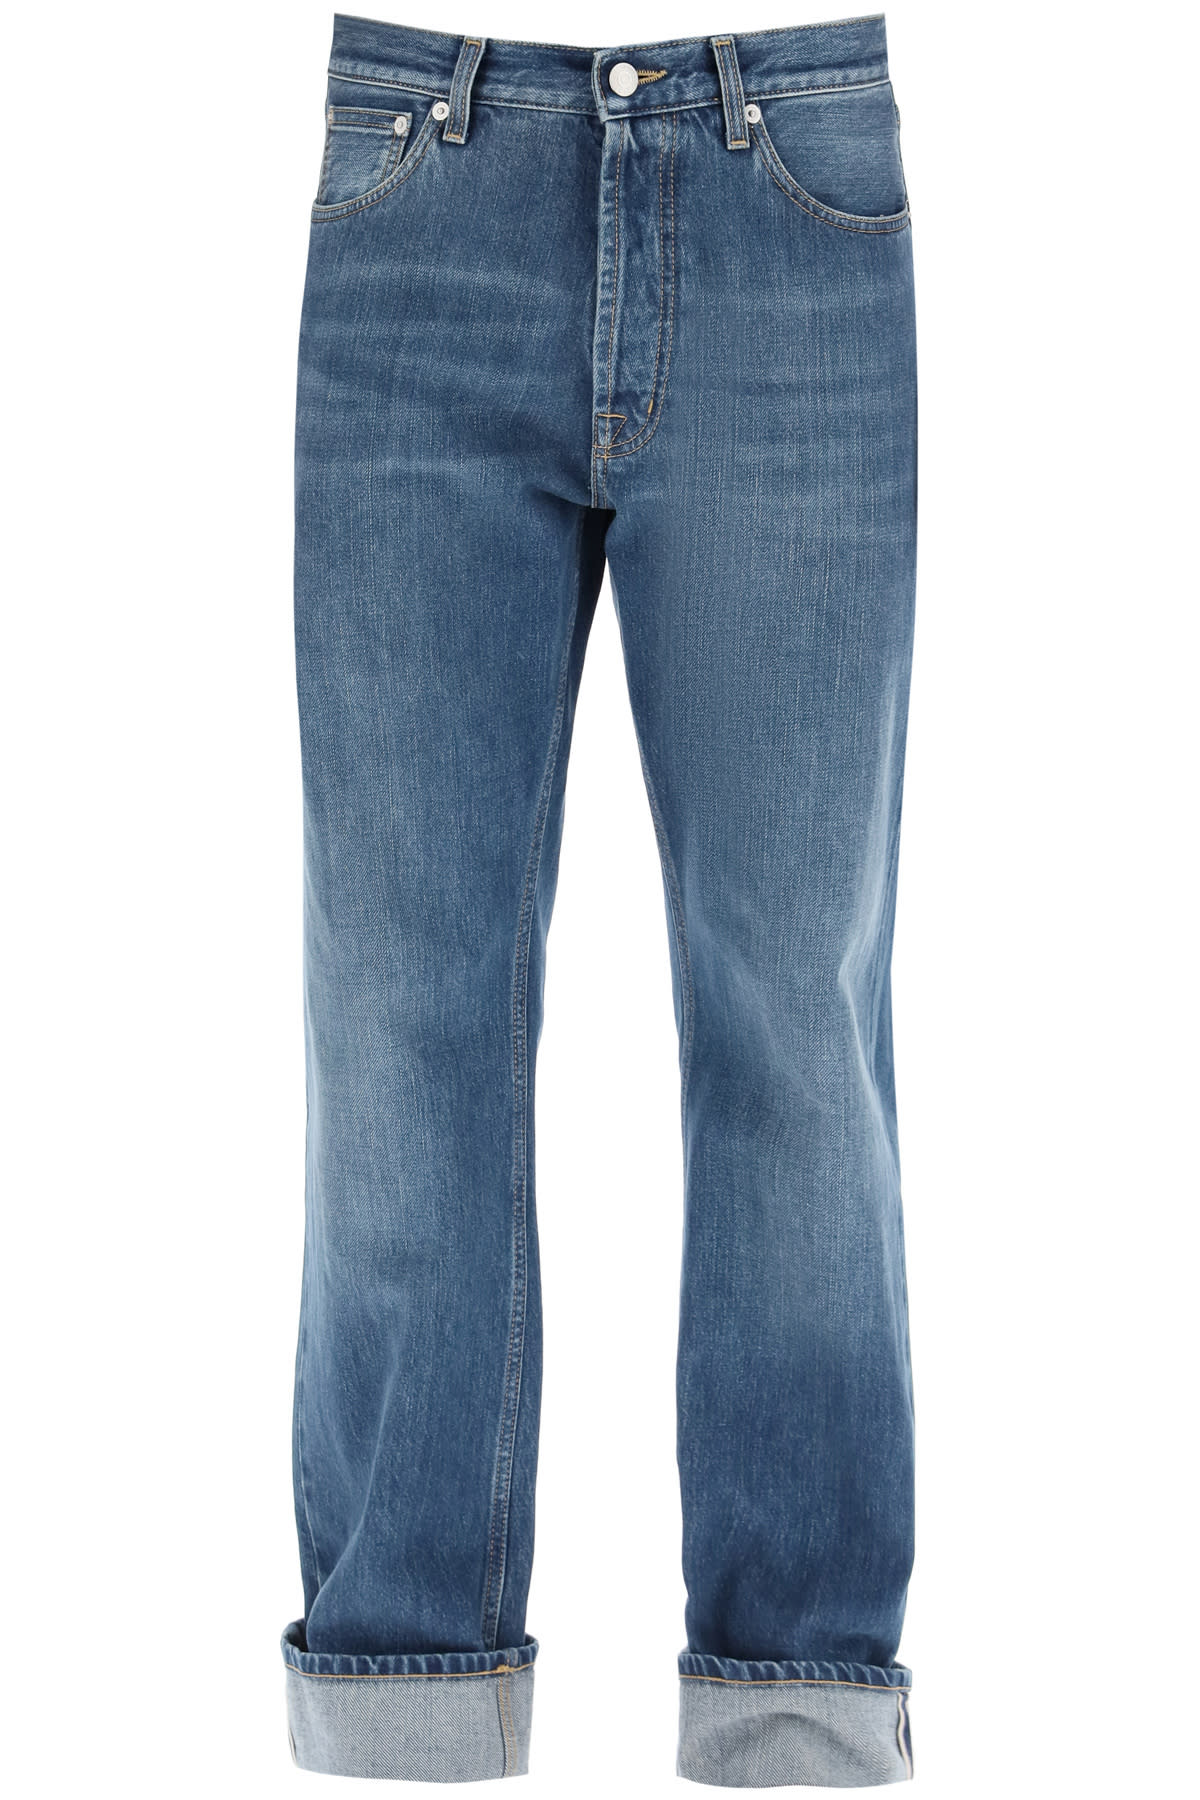 Alexander McQueen Jeans With Decorative Selvedge